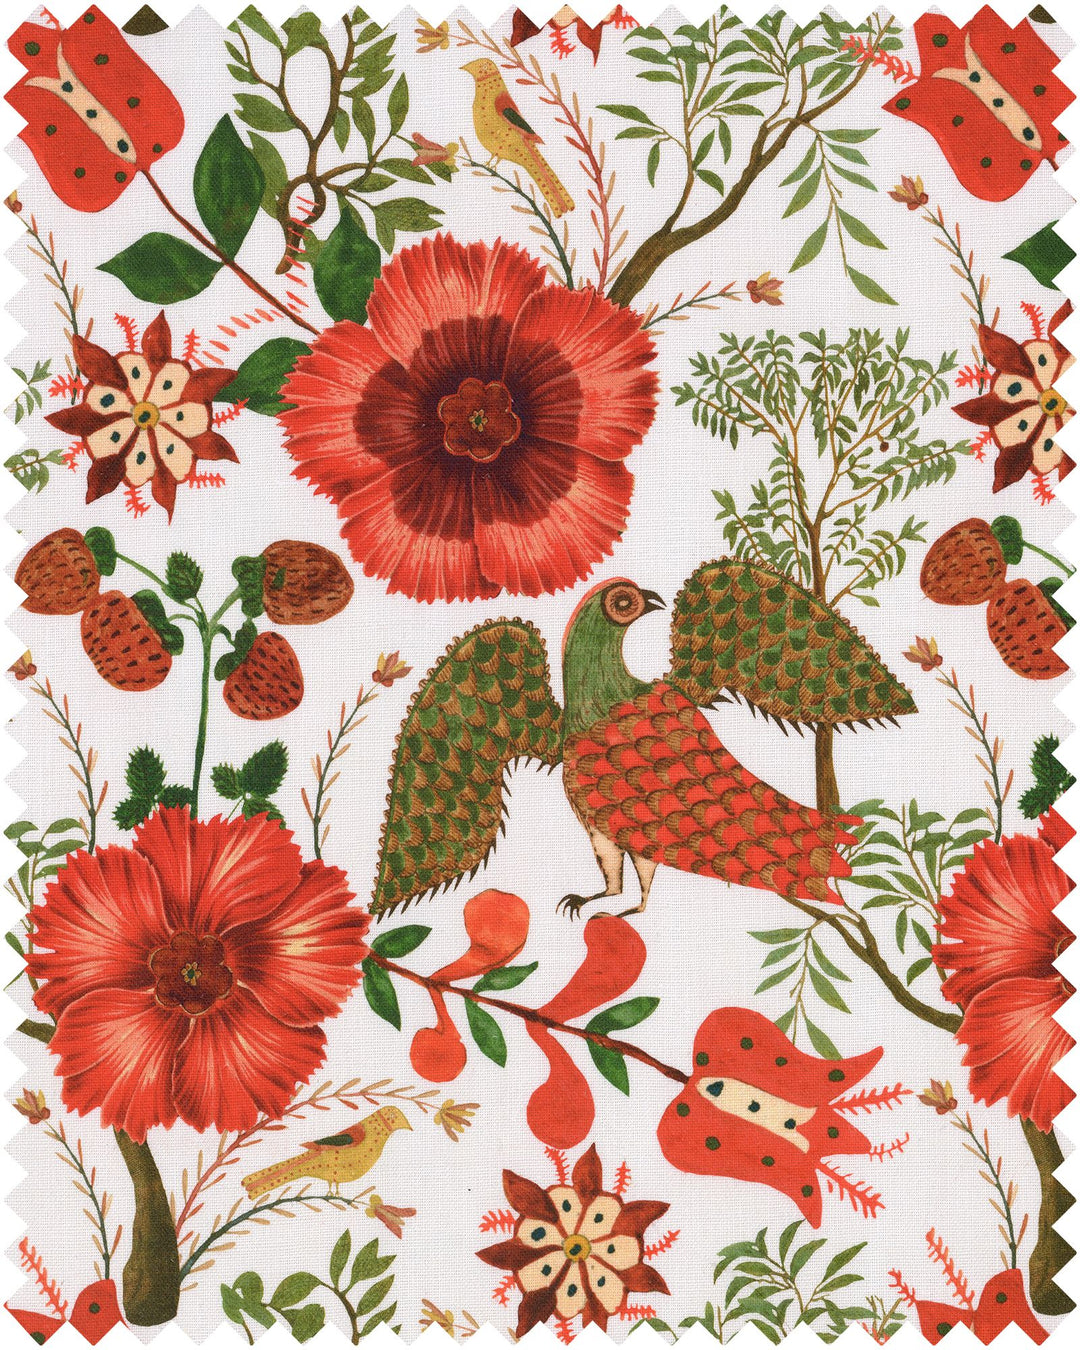 szekely-folk-linen-weave-fabric-bird-floral-red-green-white